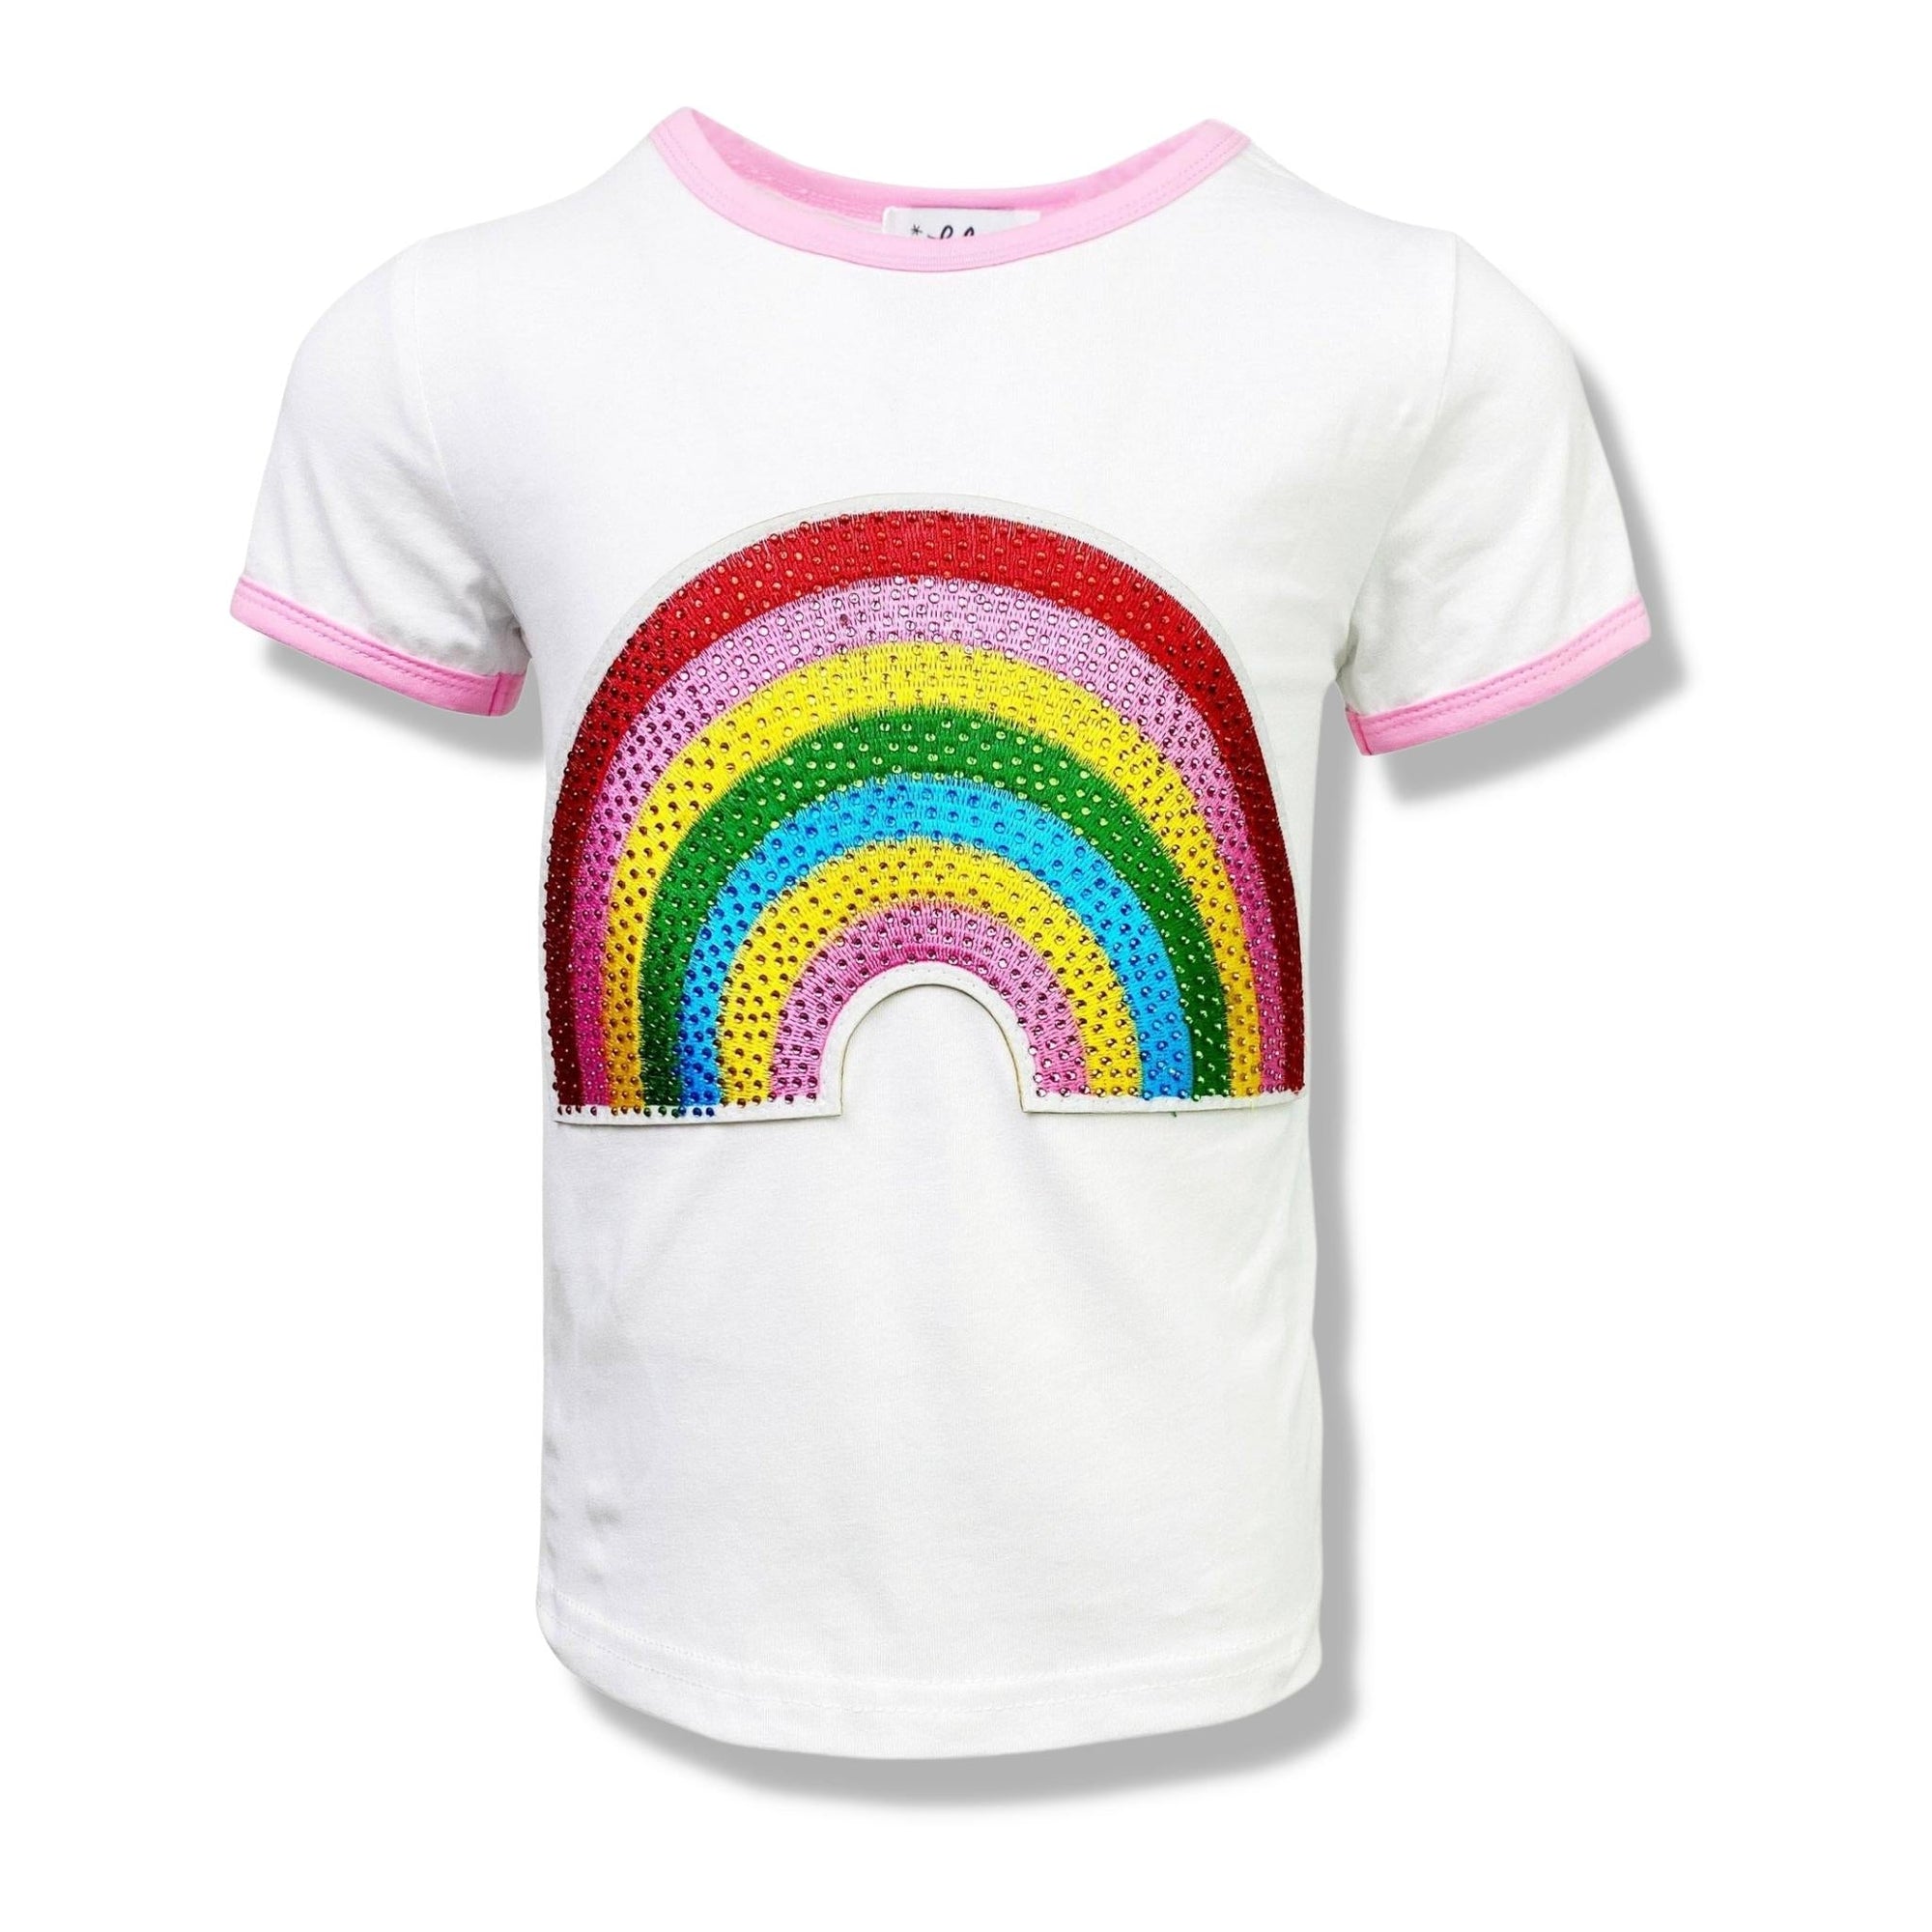 Lola and the boys White Happy Rainbow Patch Tee - a Spirit Animal - Tee Shirt $30-$45 Lola and the boys rprice-30-45